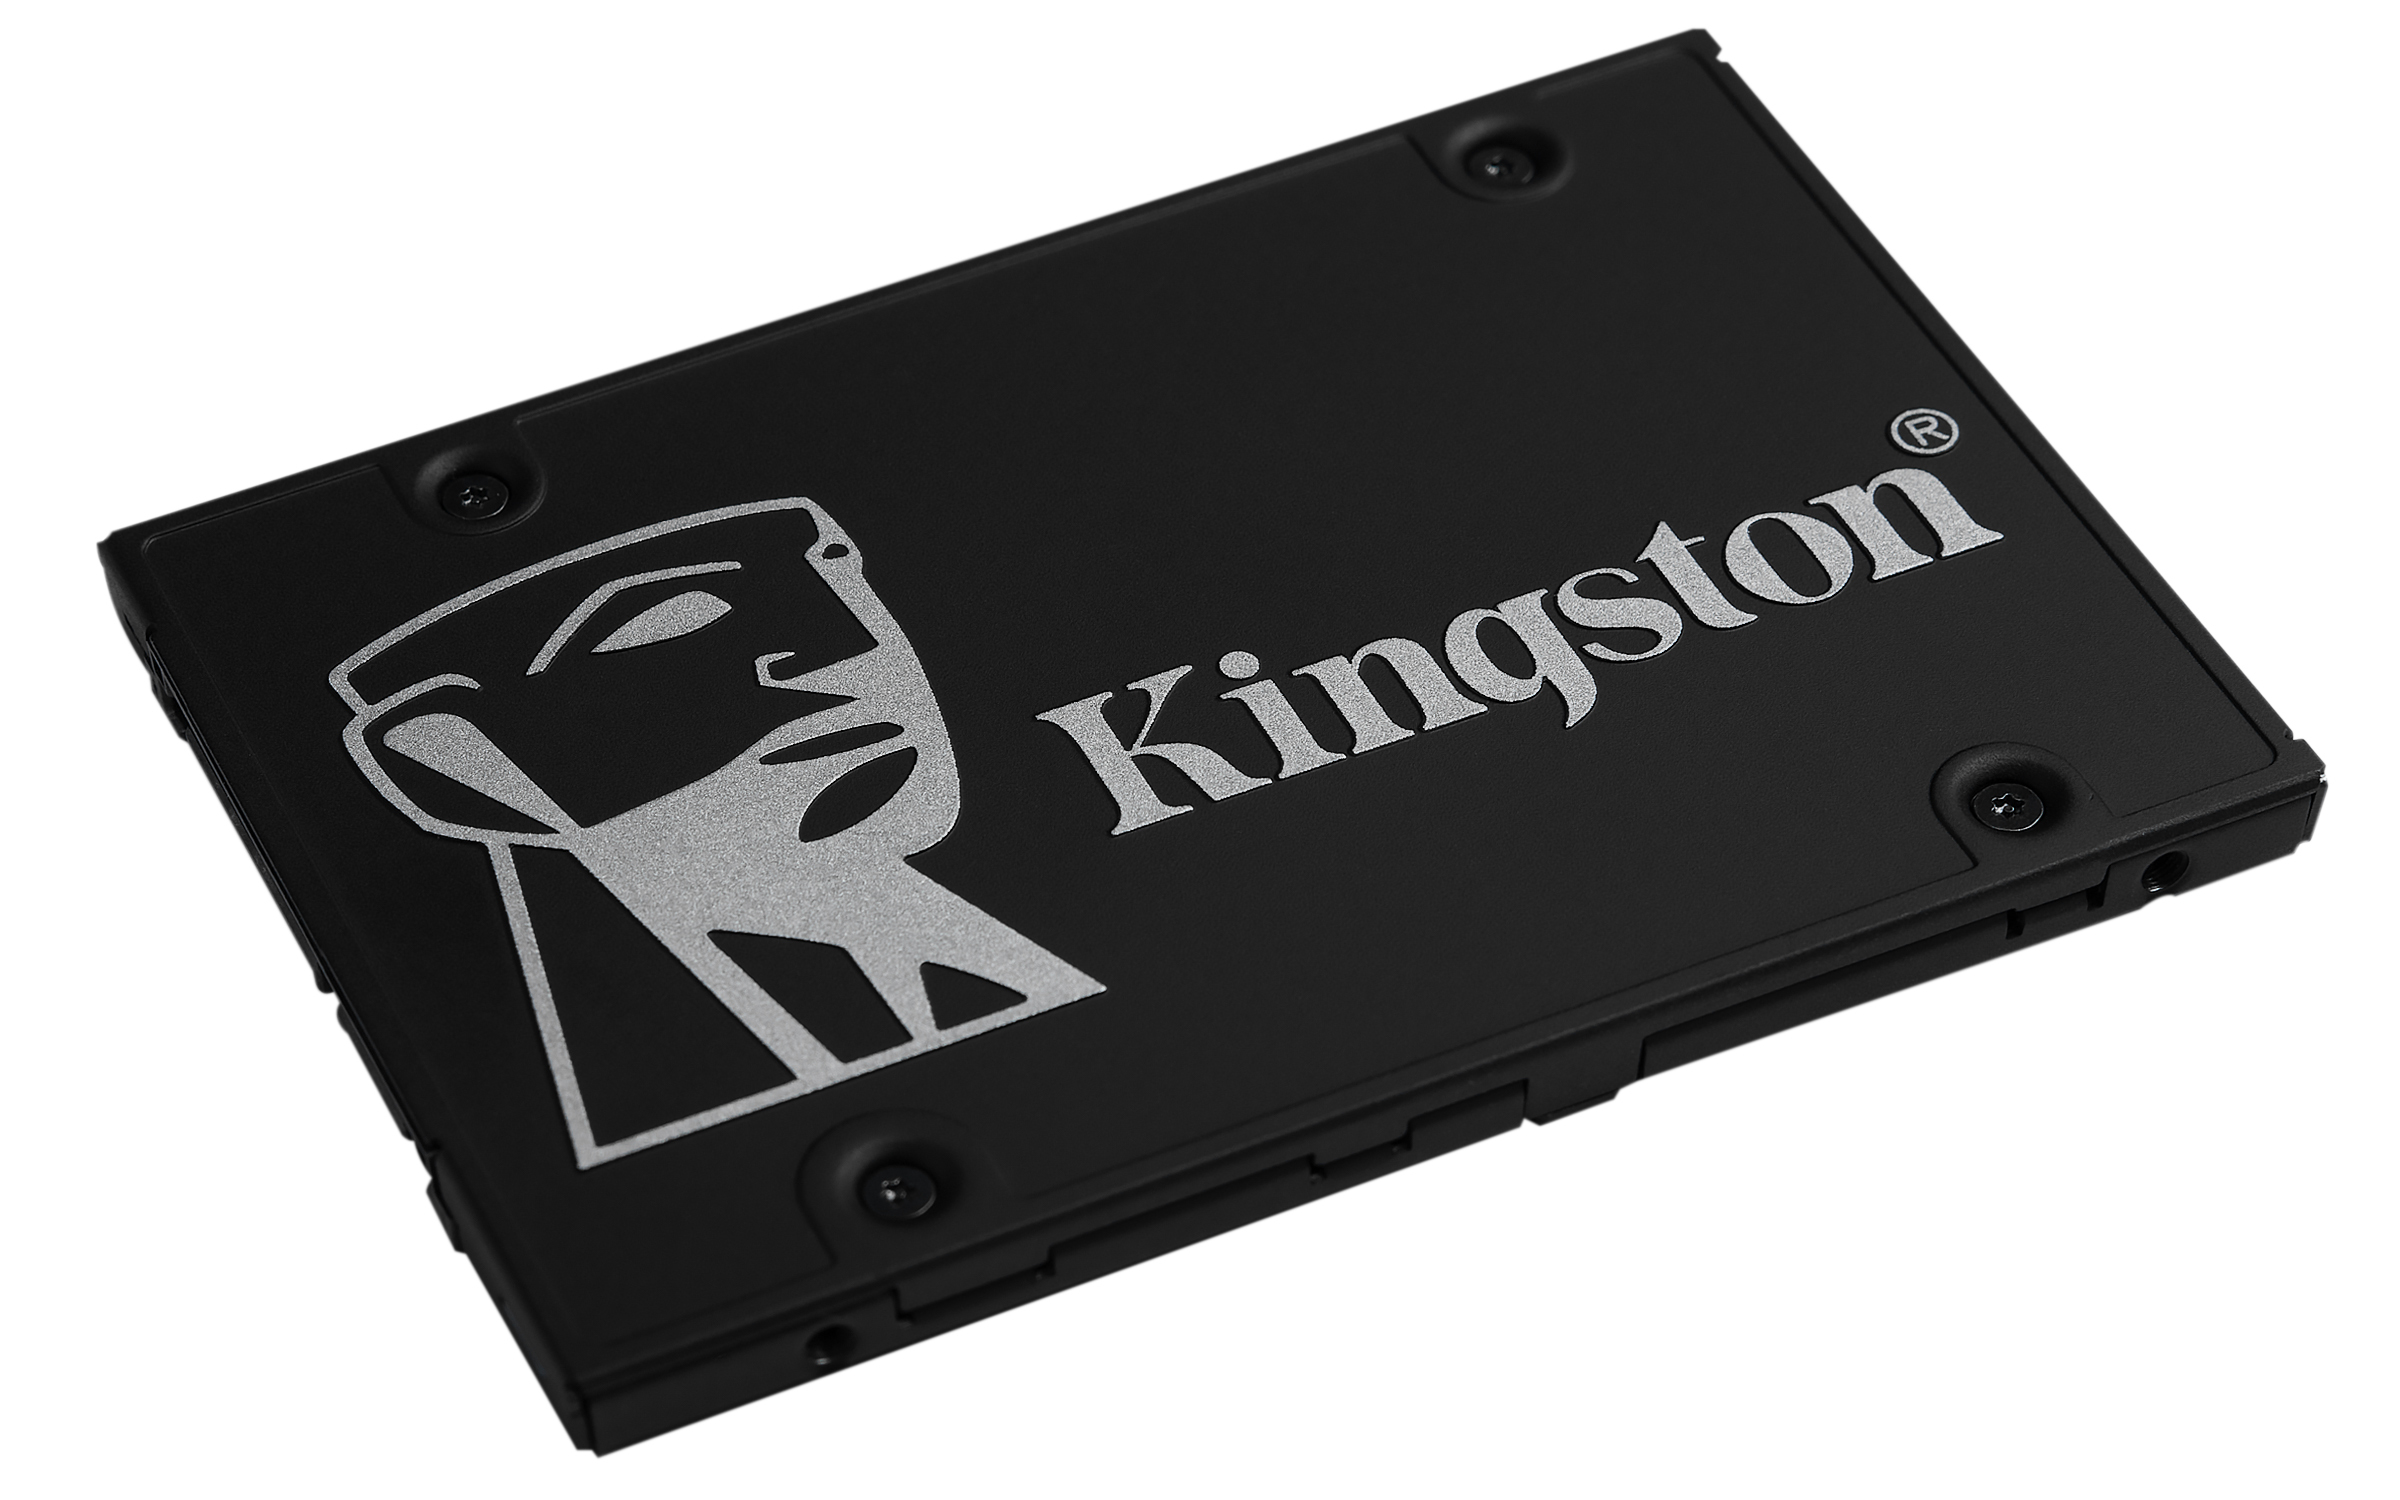 Kingston SSD NV2 500GB M.2 NVMe Disques SSD Kingston Maroc